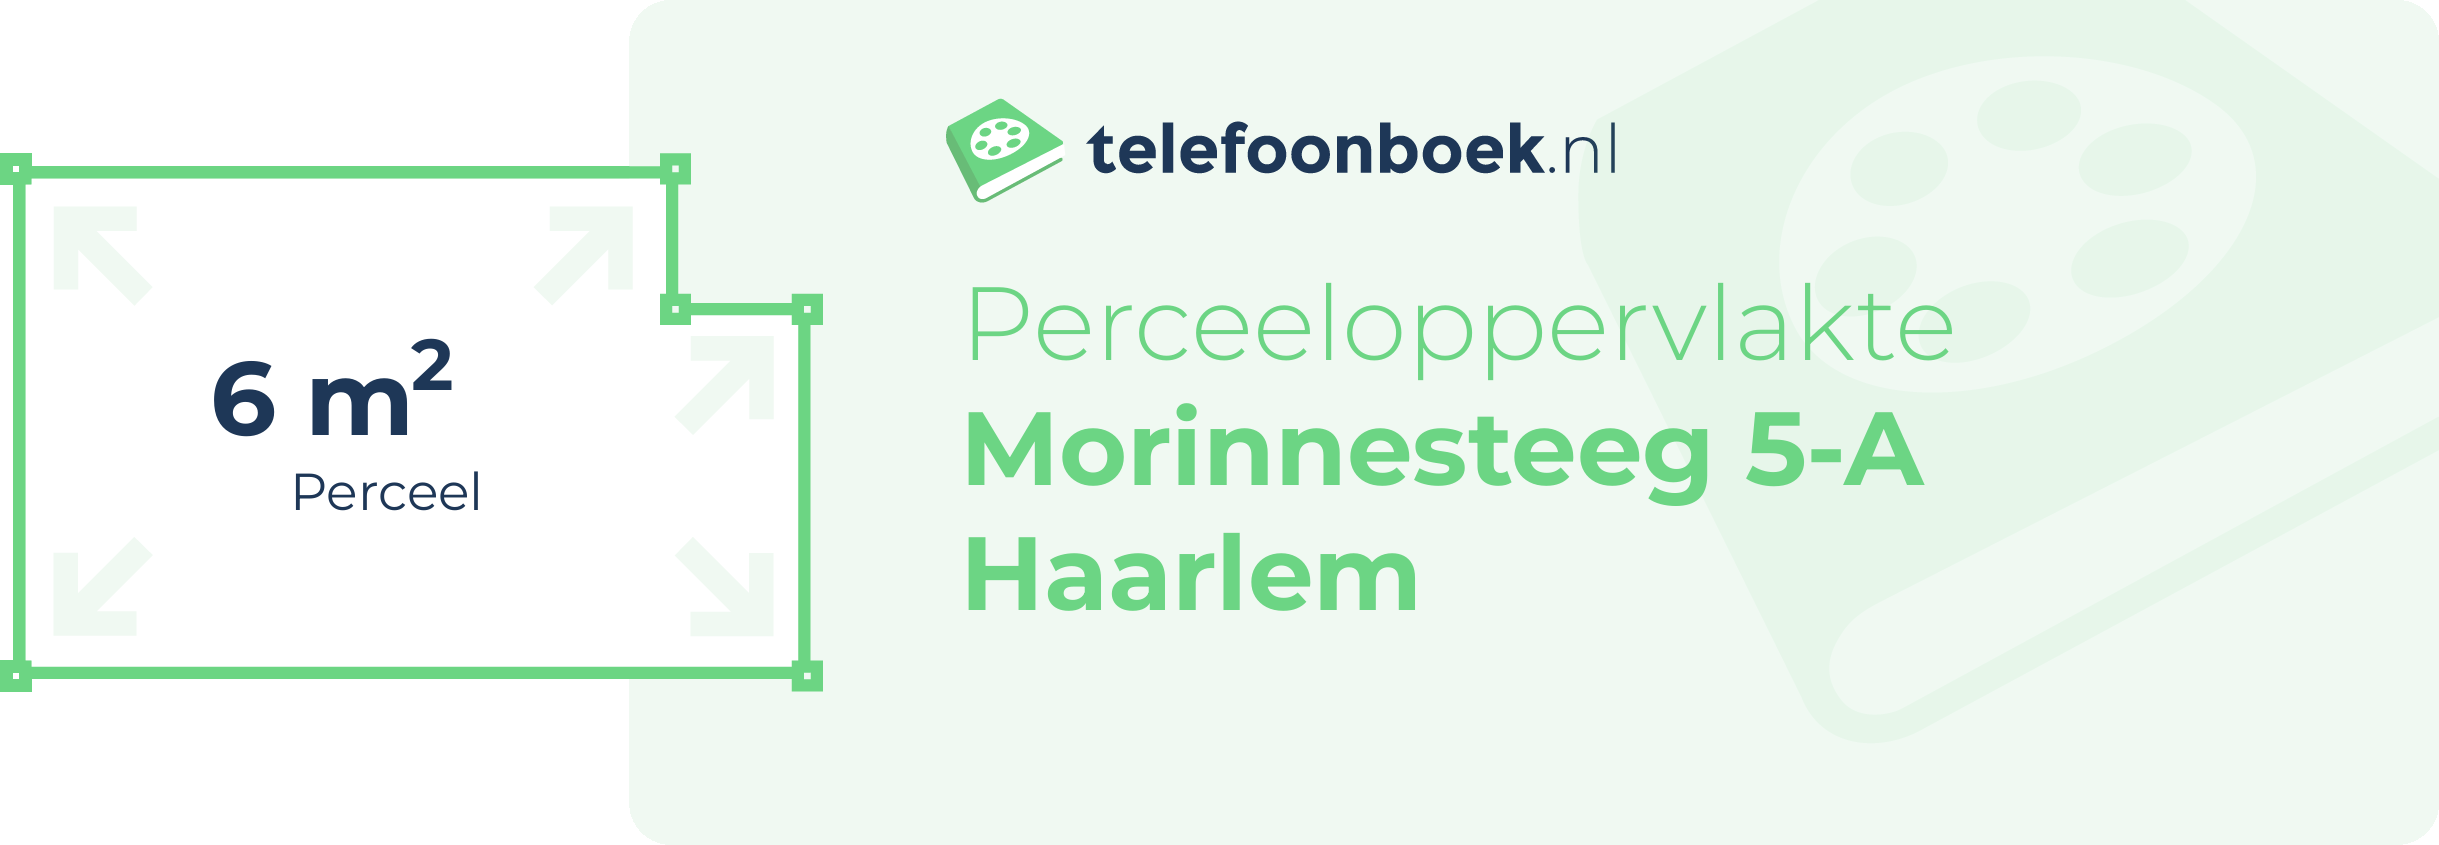 Perceeloppervlakte Morinnesteeg 5-A Haarlem